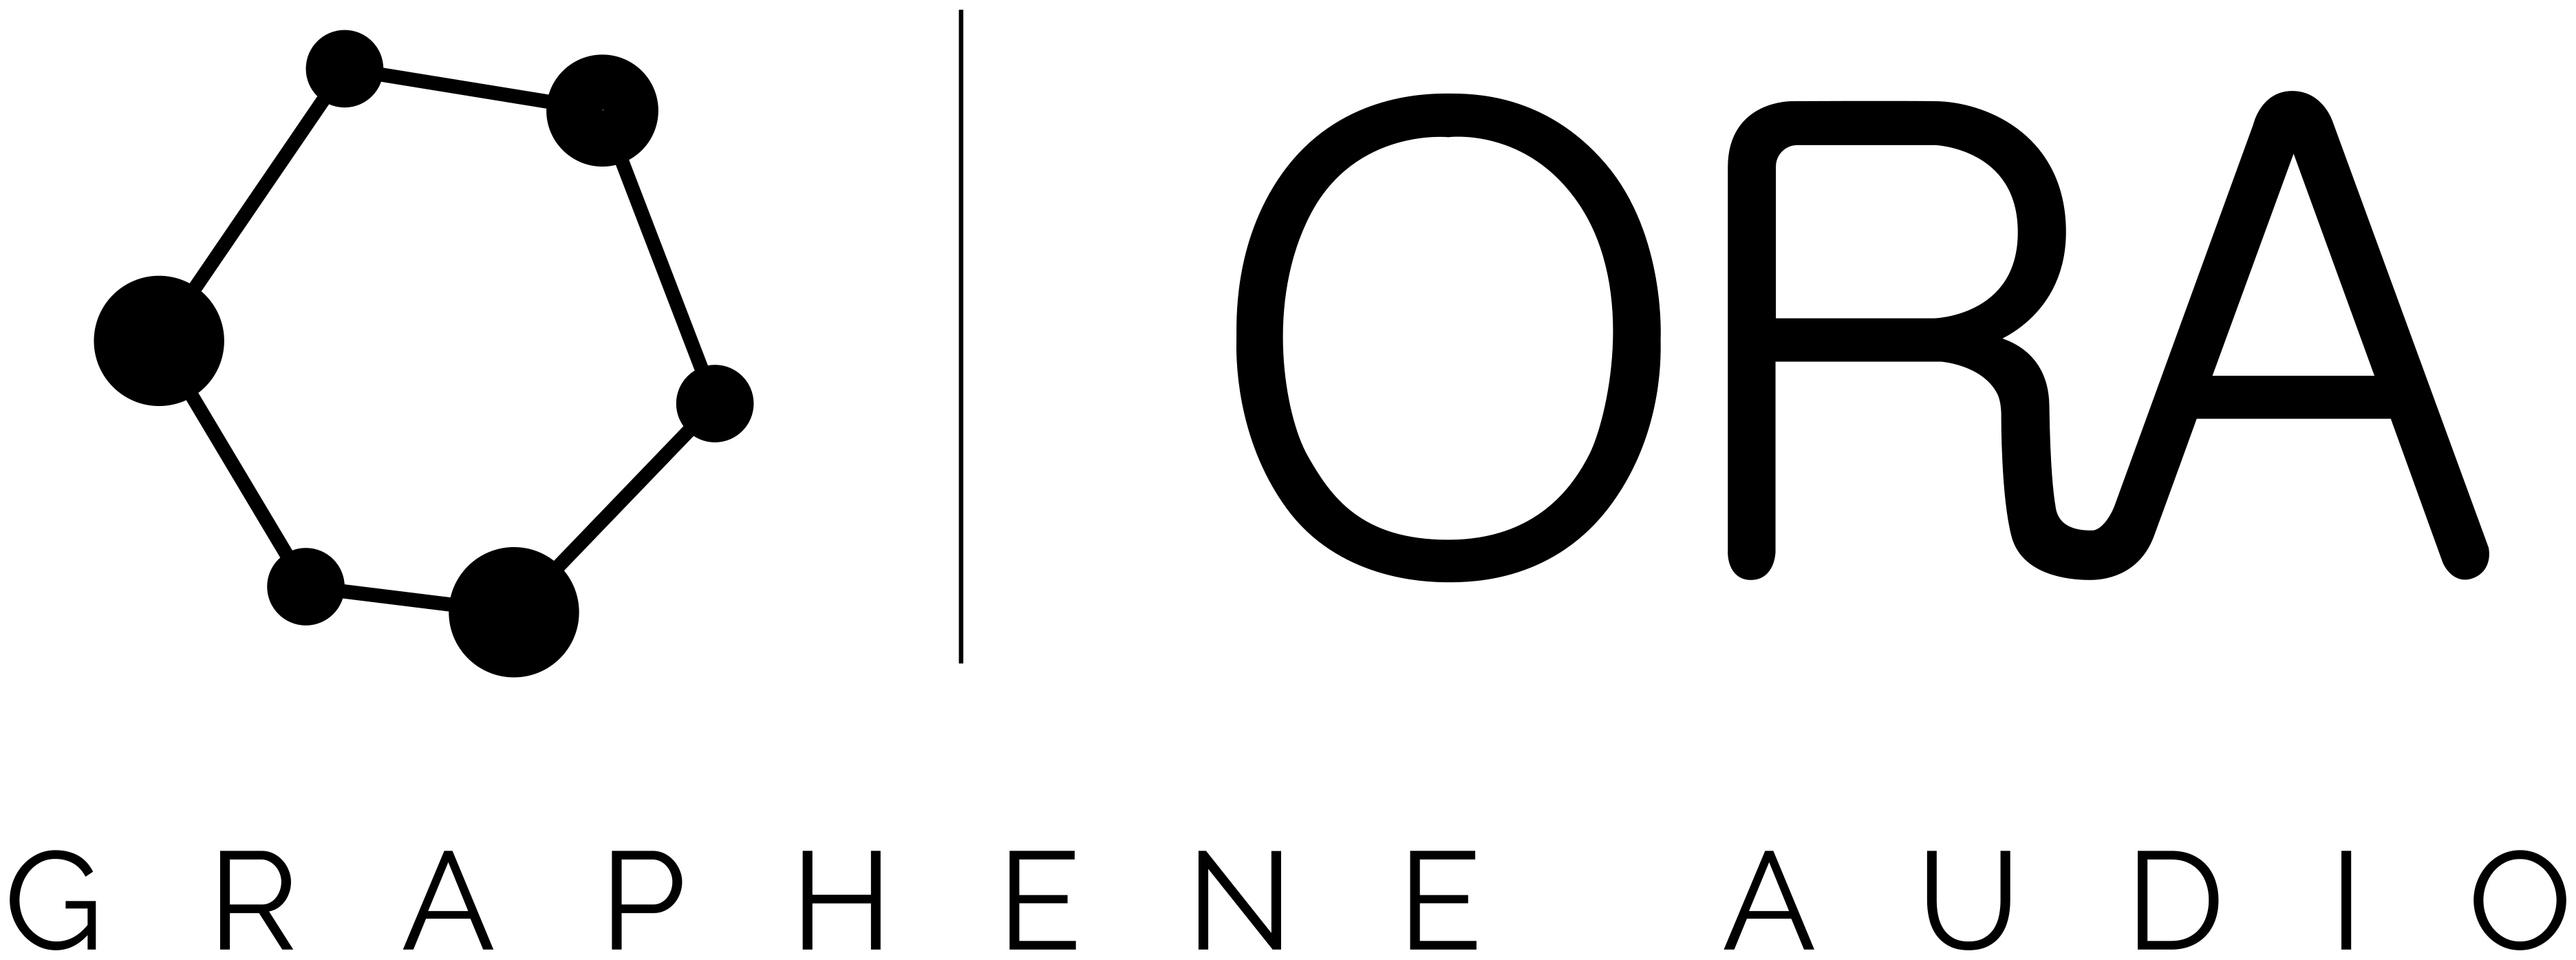 Black logo - text.png